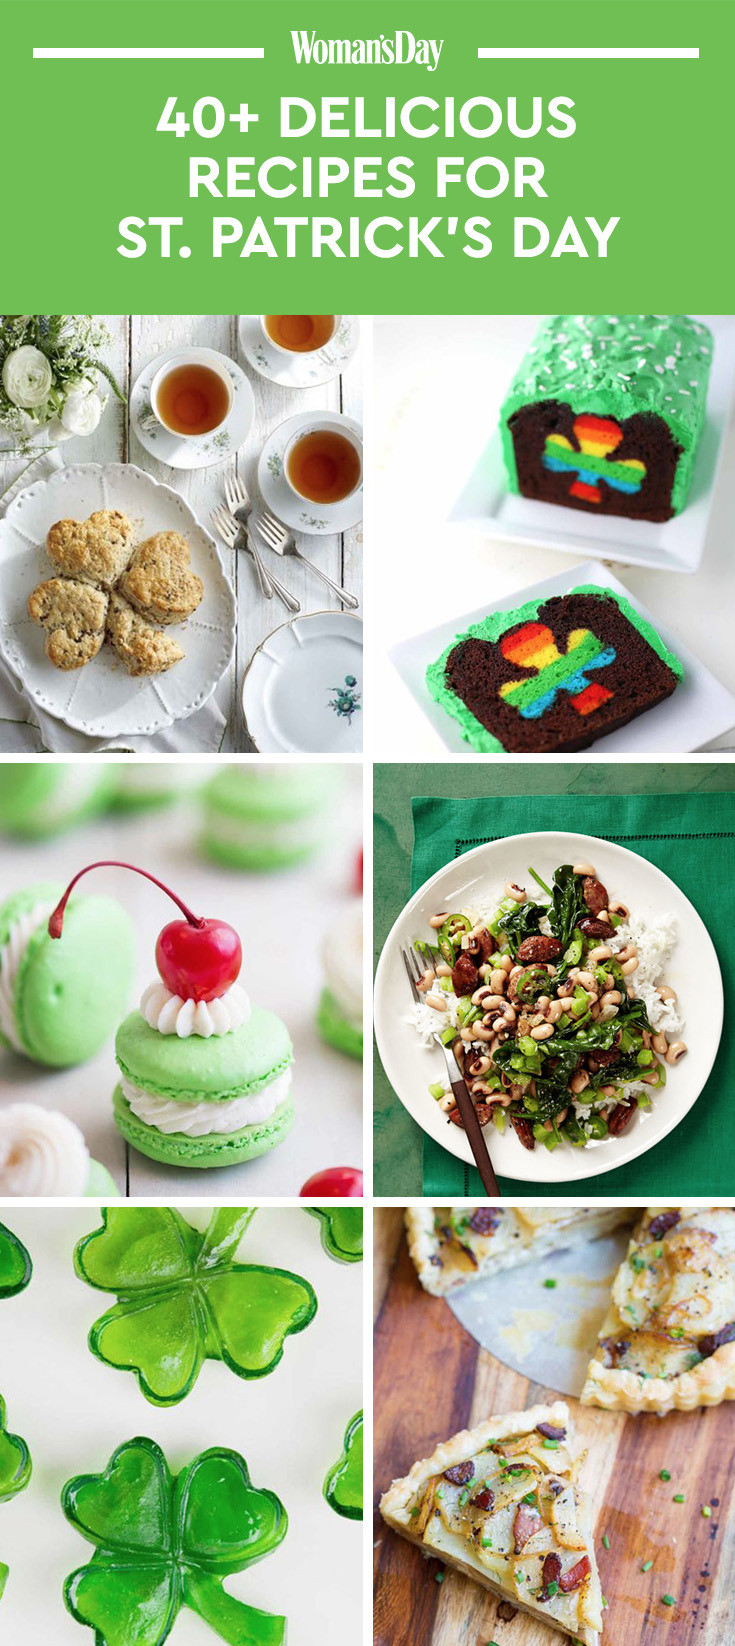 Irish Recipes For St Patrick'S Day
 45 St Patricks Day Recipes – Irish Food Ideas for St